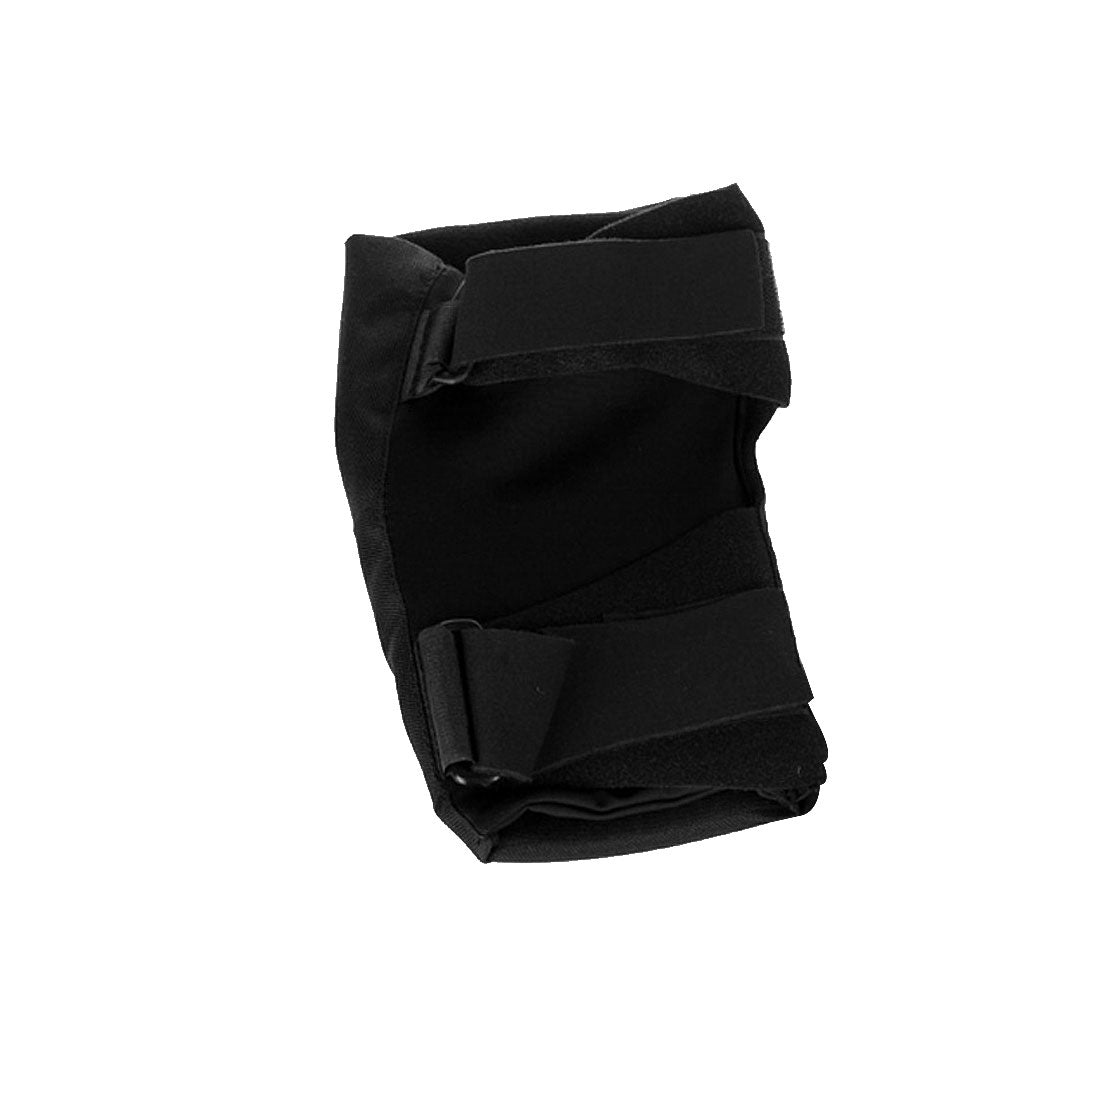 Smith Scabs Elite Elbow - Black/White Protective Pads